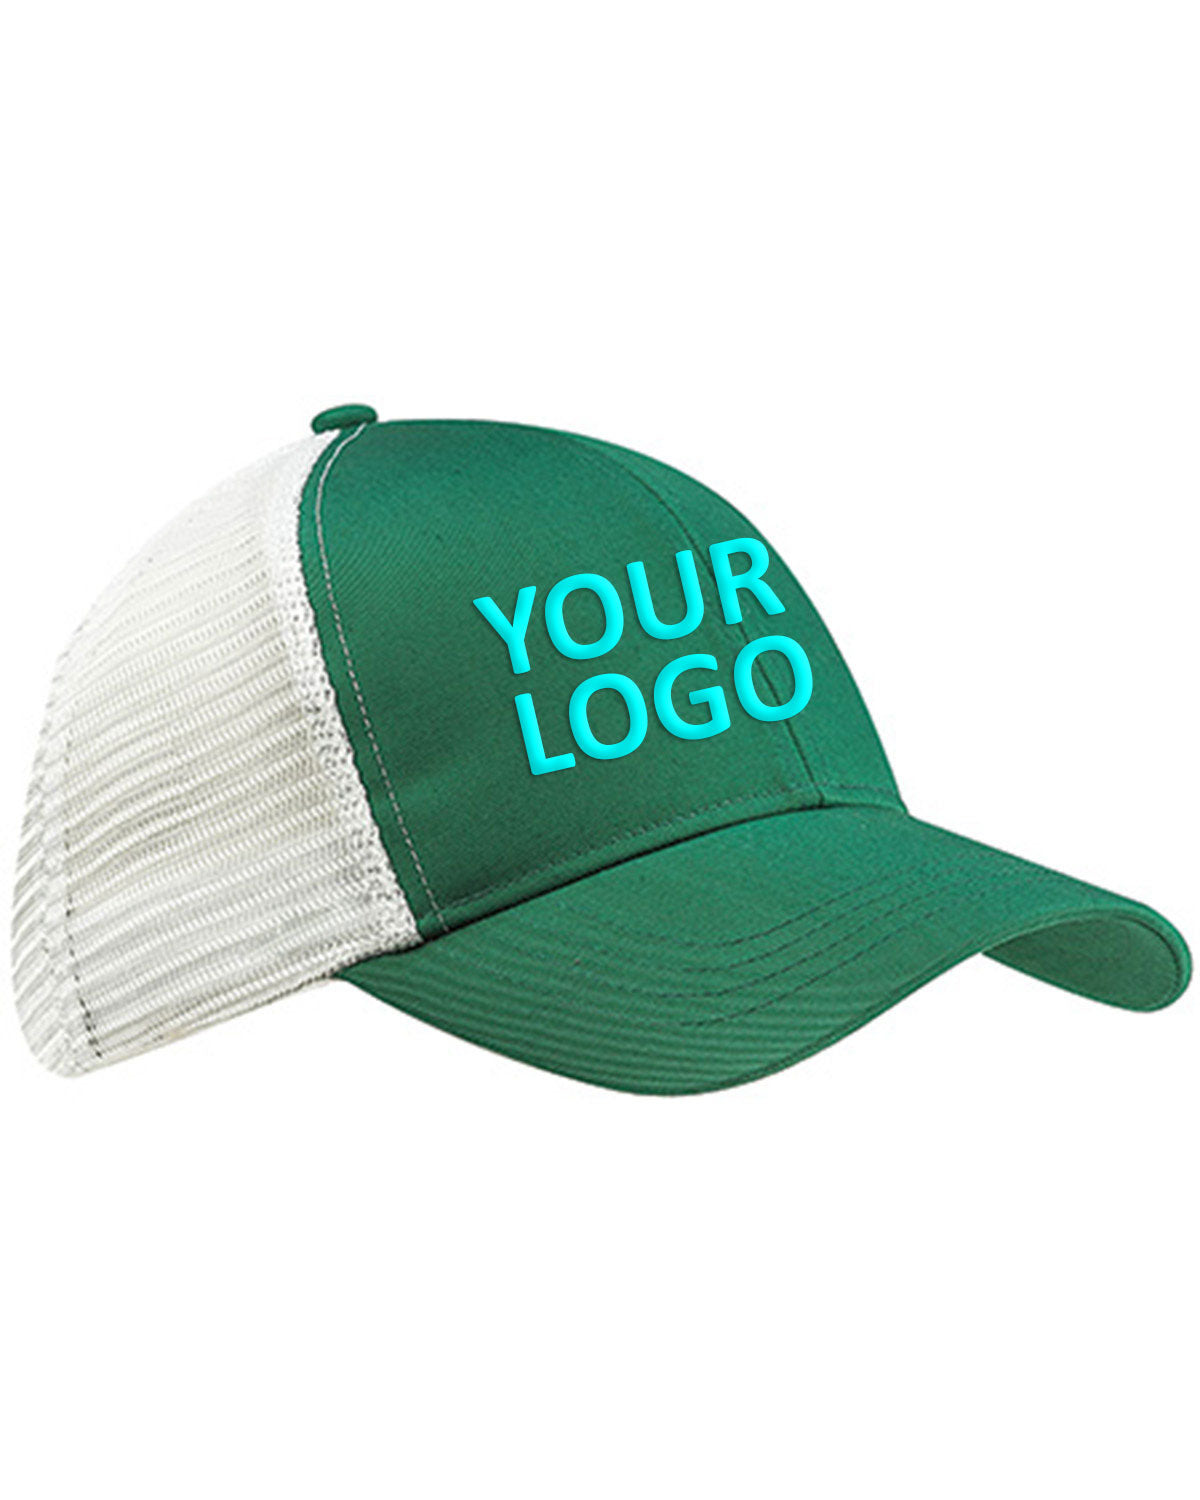 econscious_ec7070_green/ white_company_logo_headwear